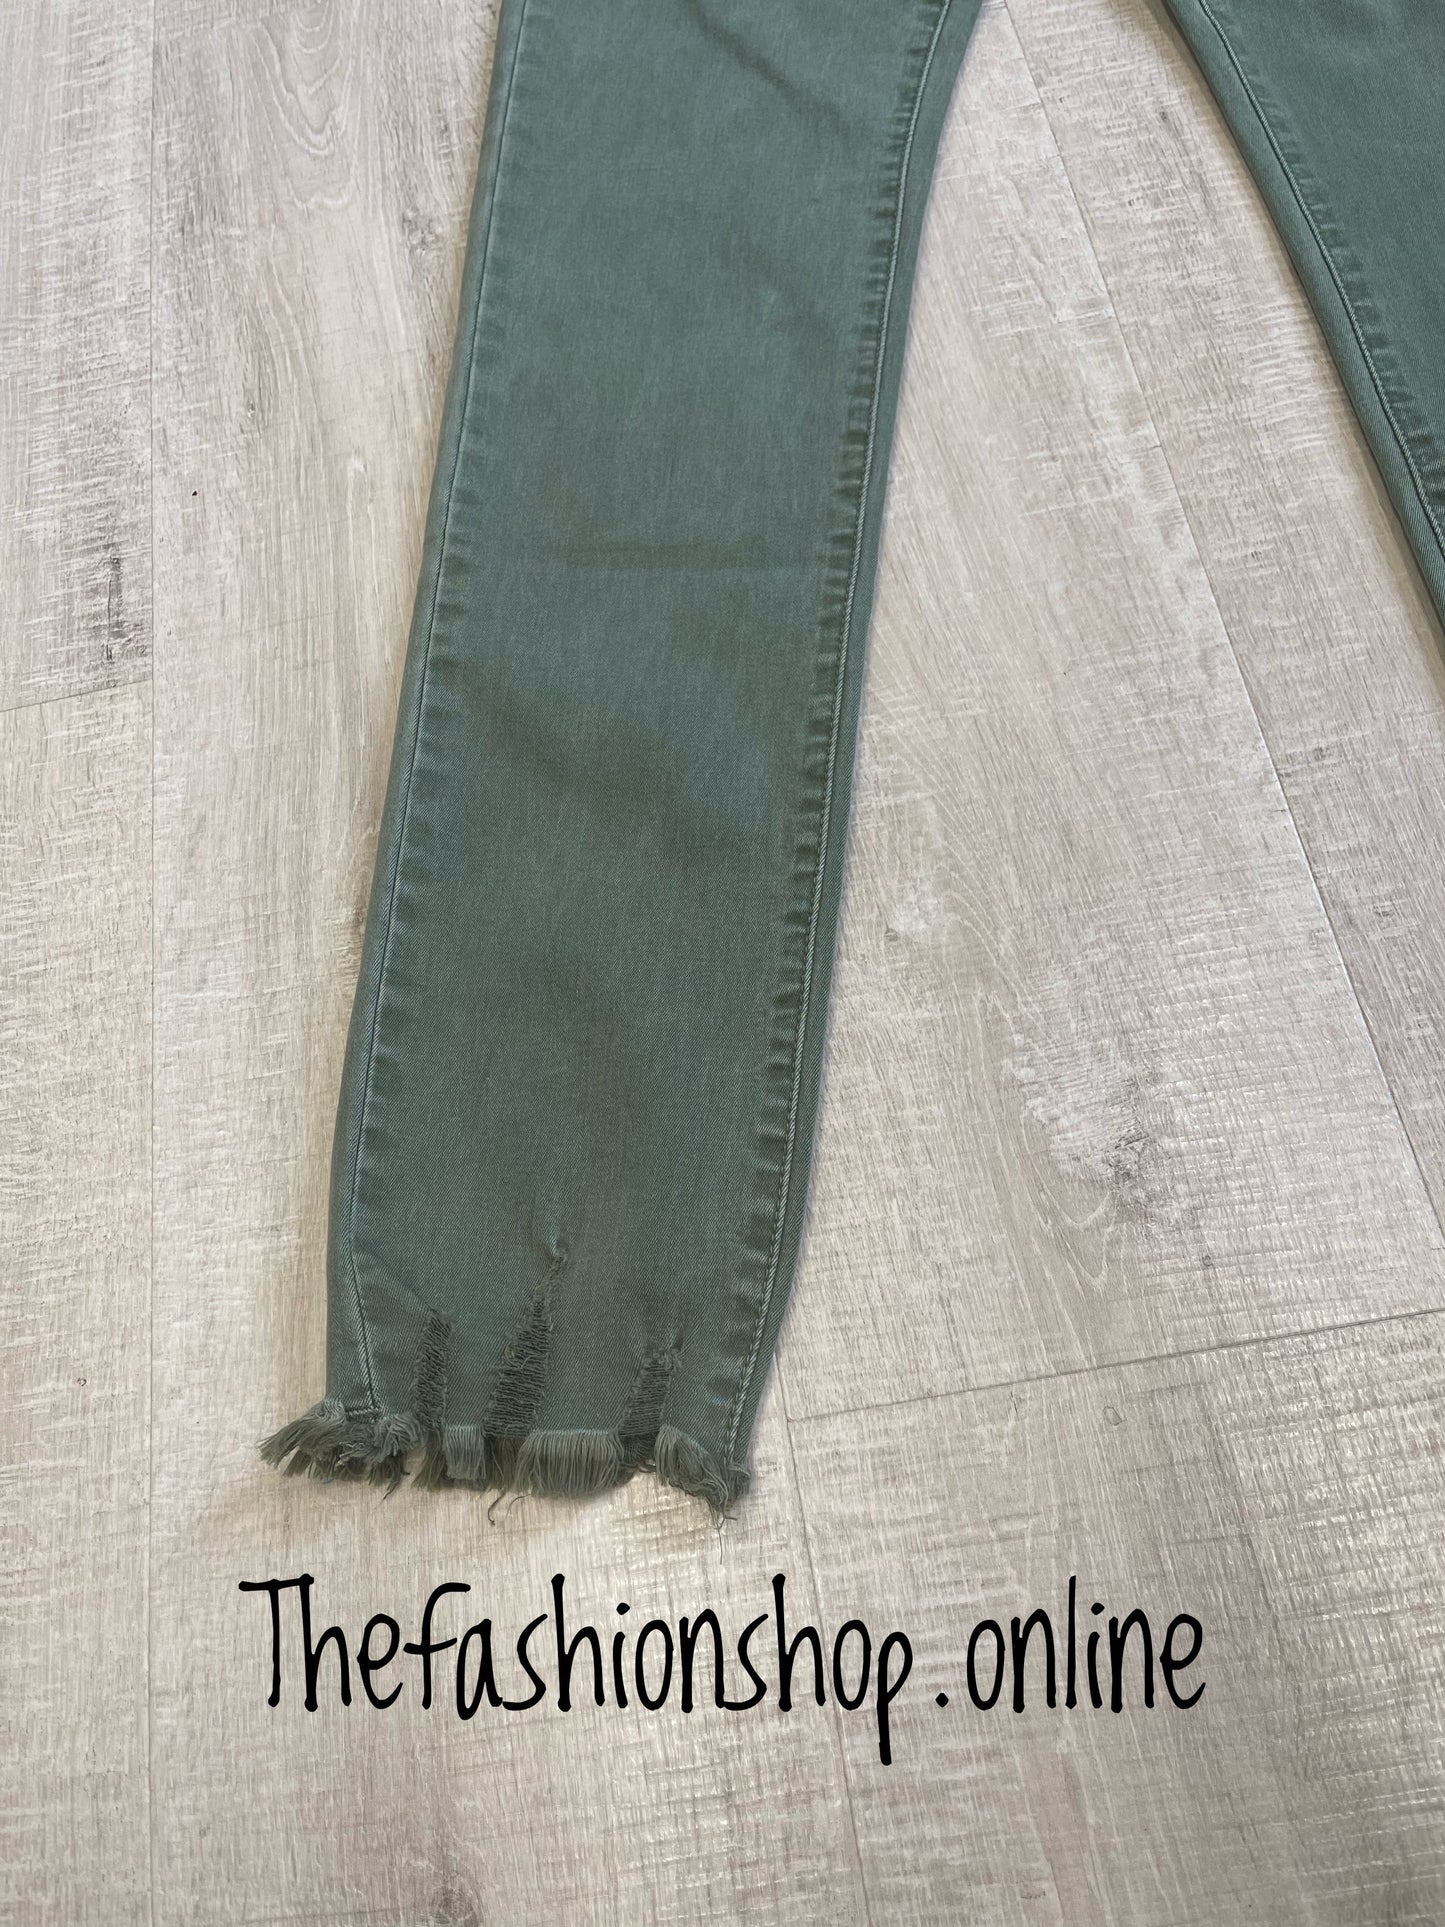 Khaki green premium ladies fit frayed edge jeans 10-20